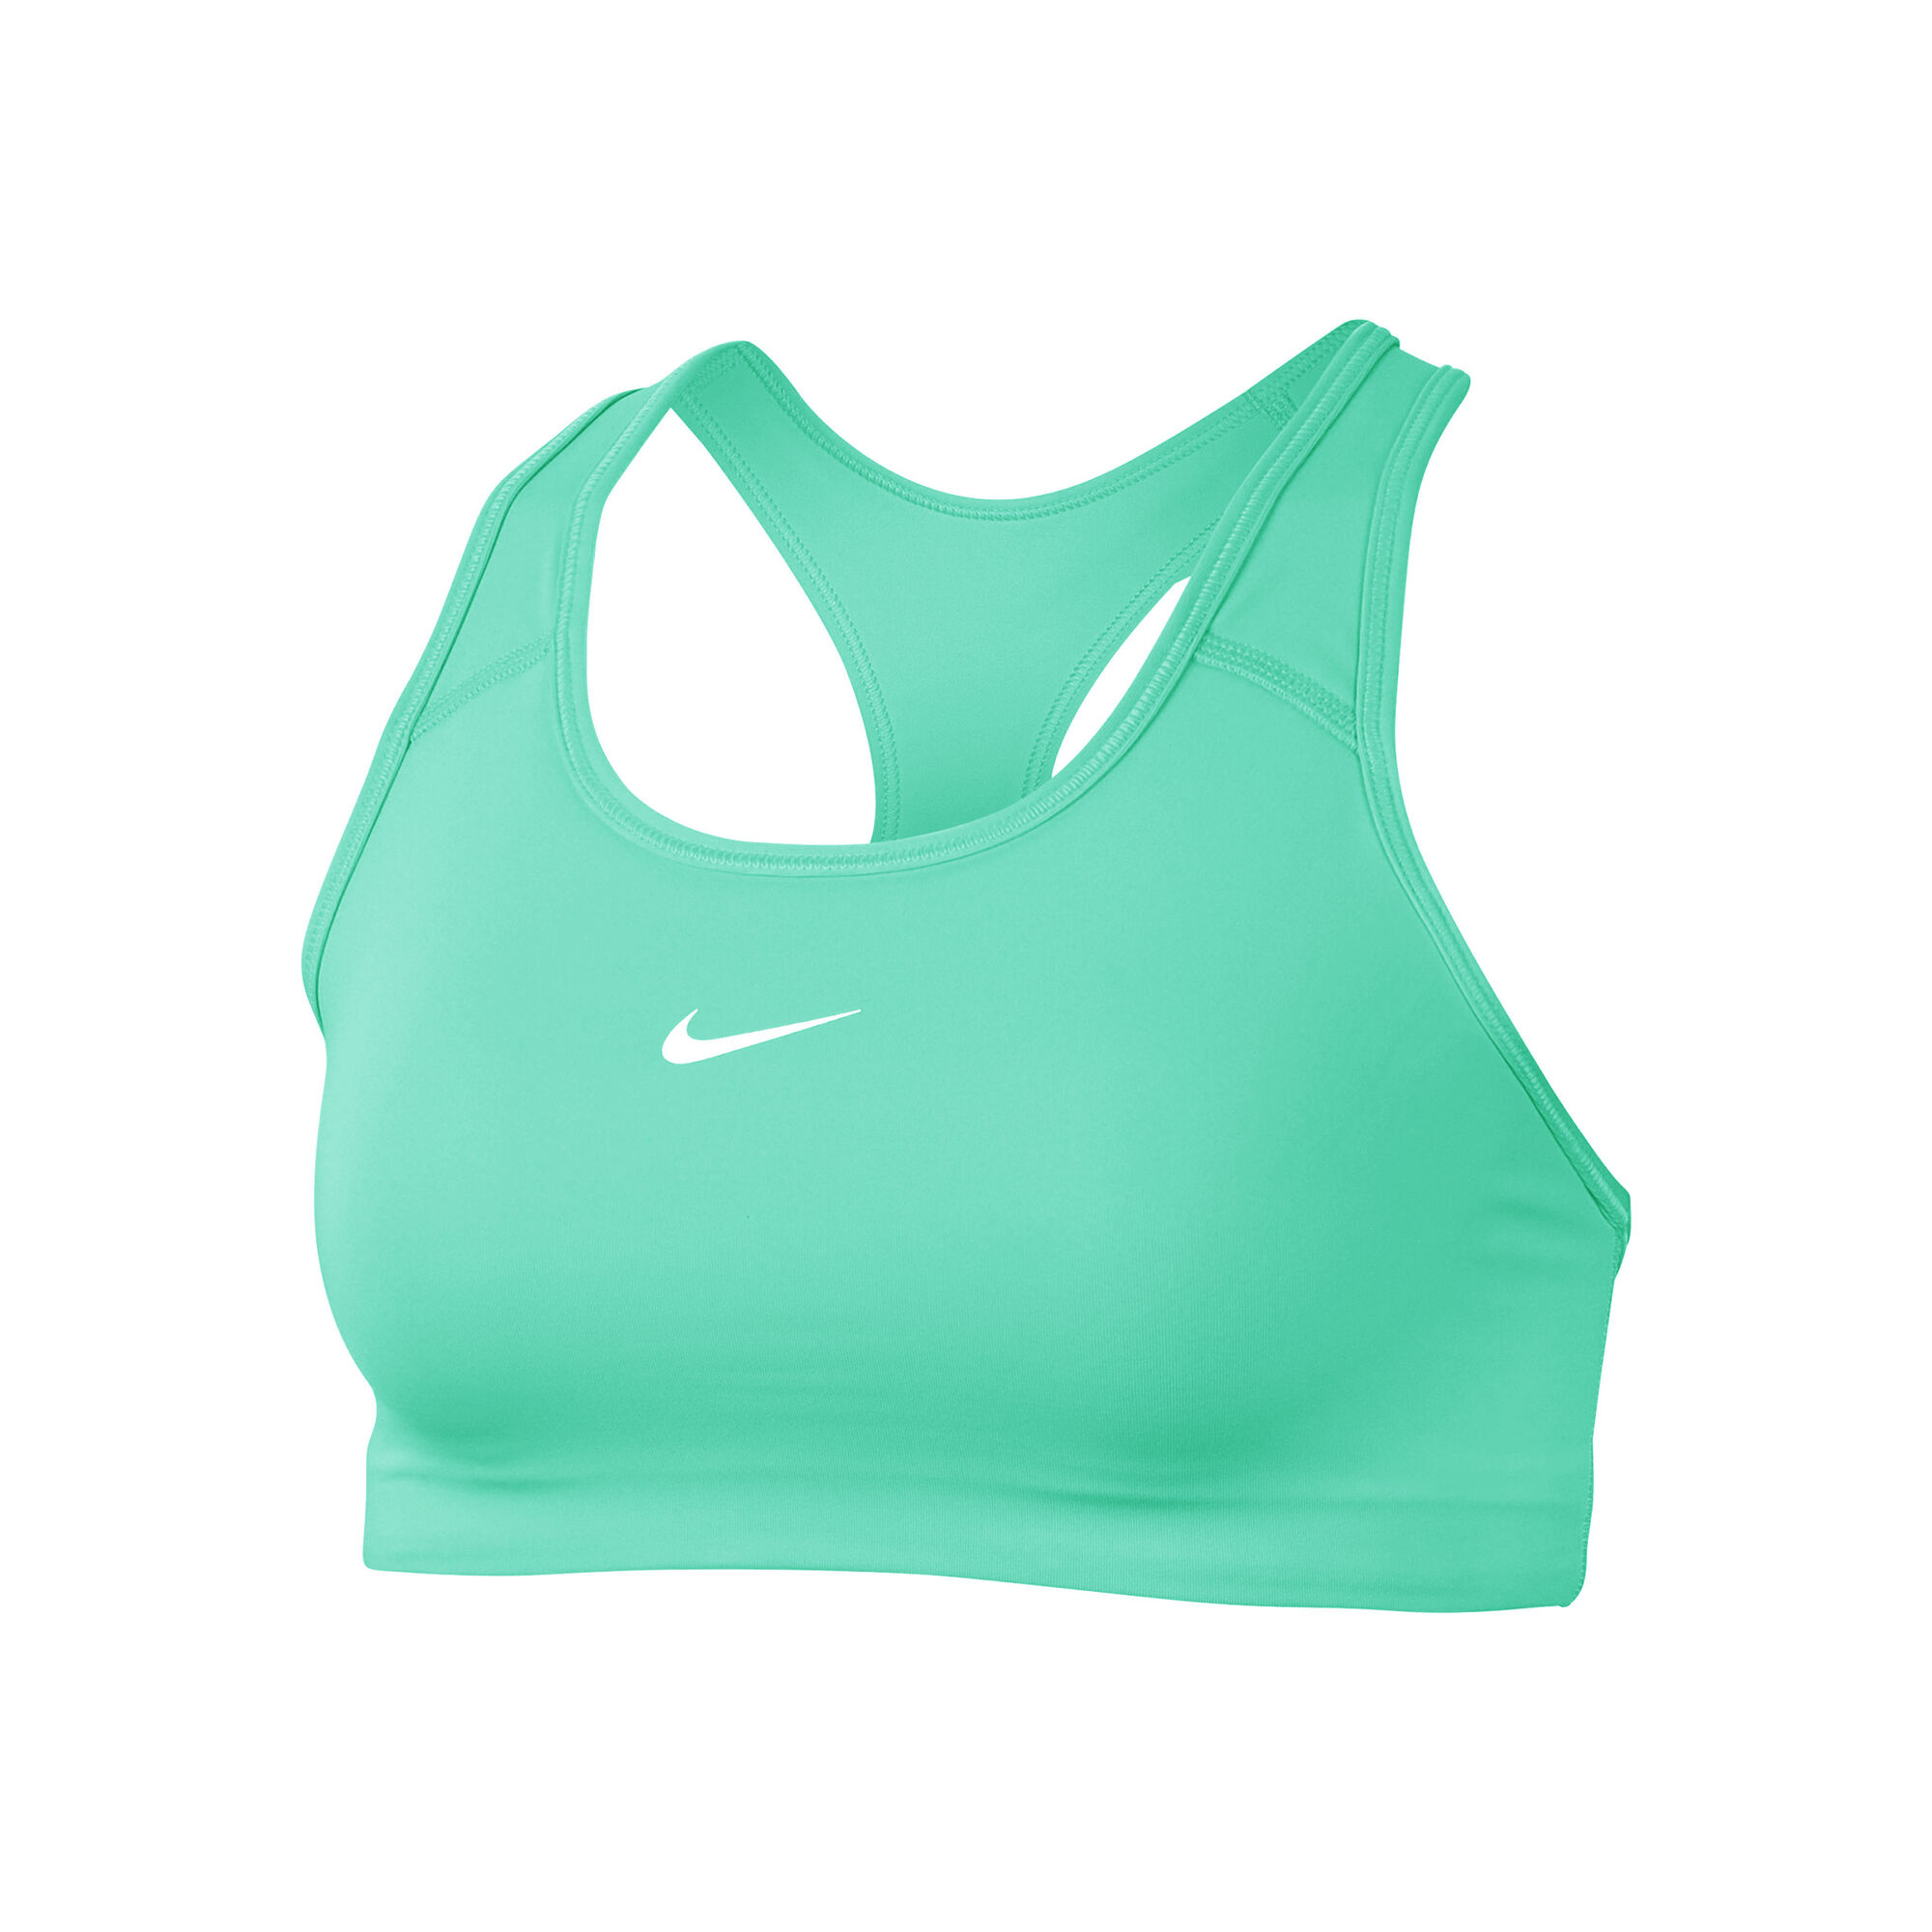 Buy Nike Dark Green Medium Swoosh Support Sports Bra from Next Luxembourg